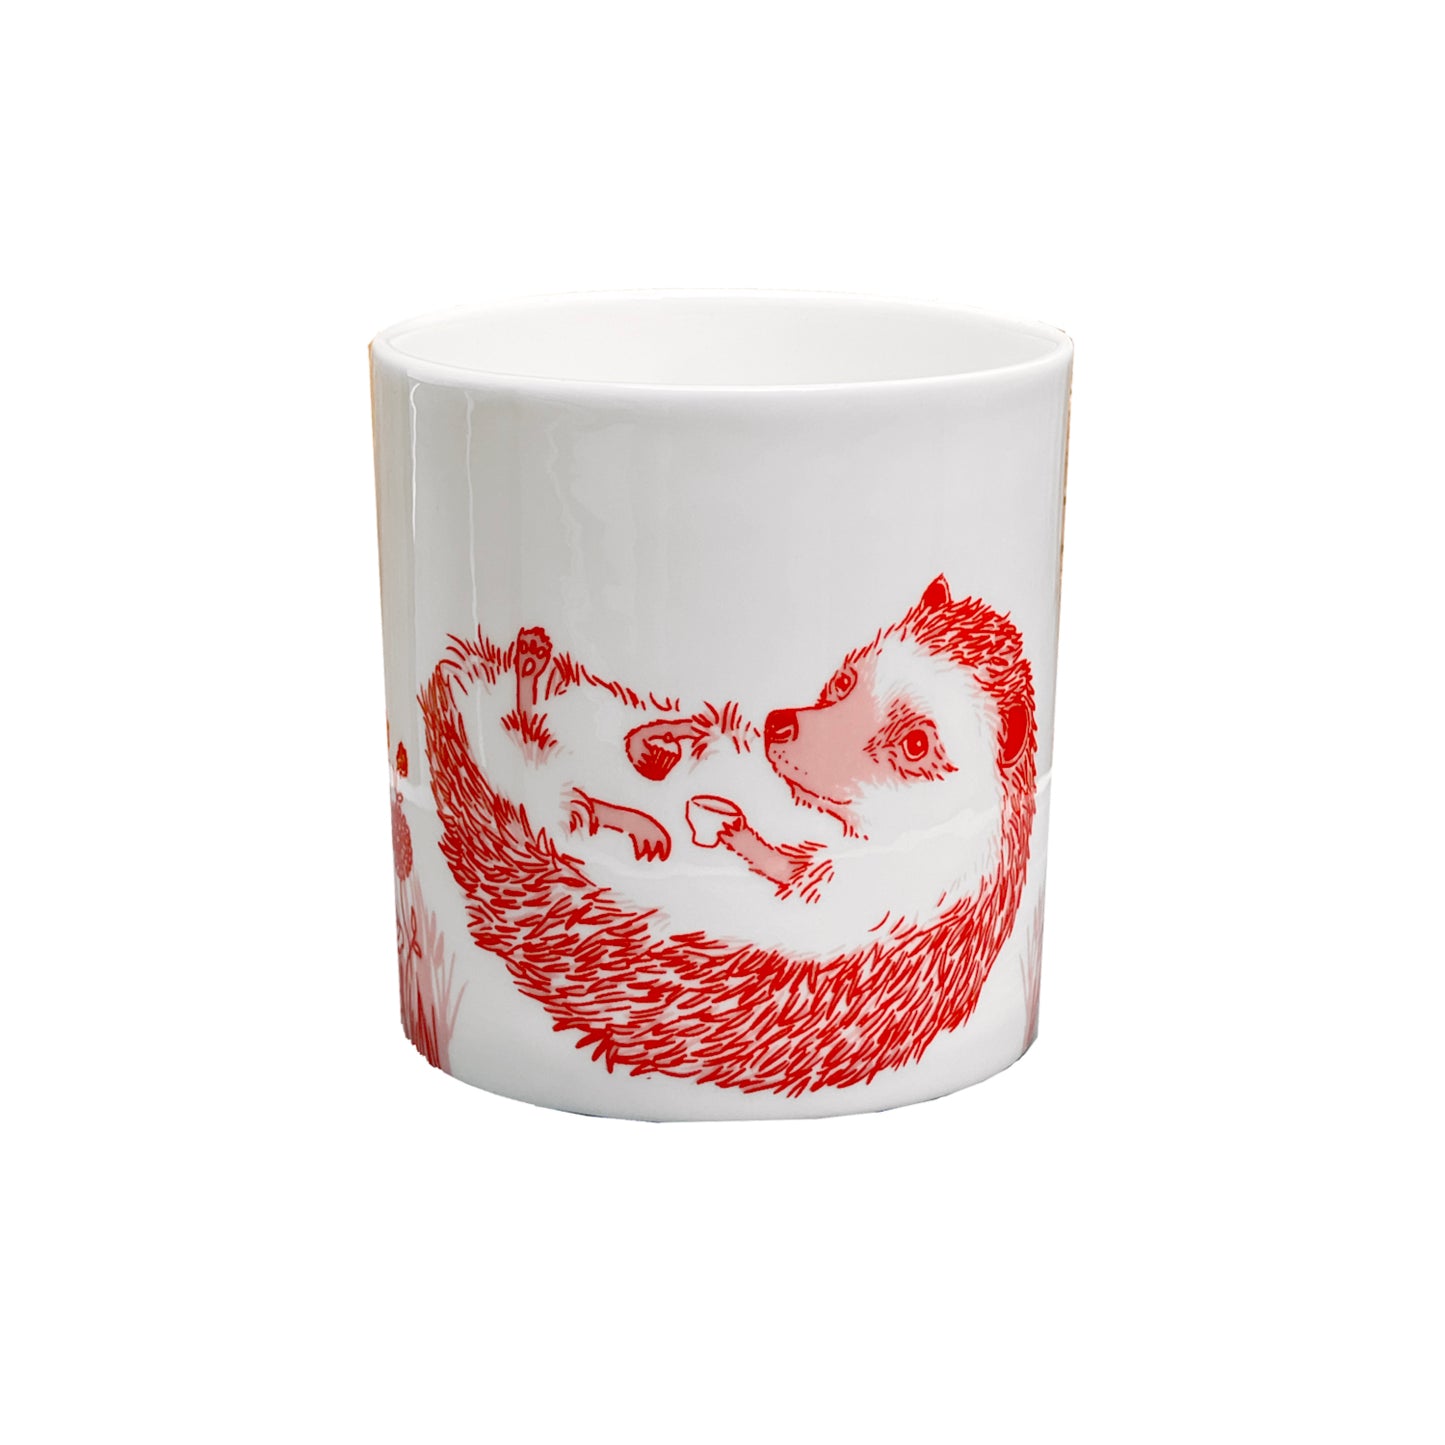 Hedgehog willow pattern mug